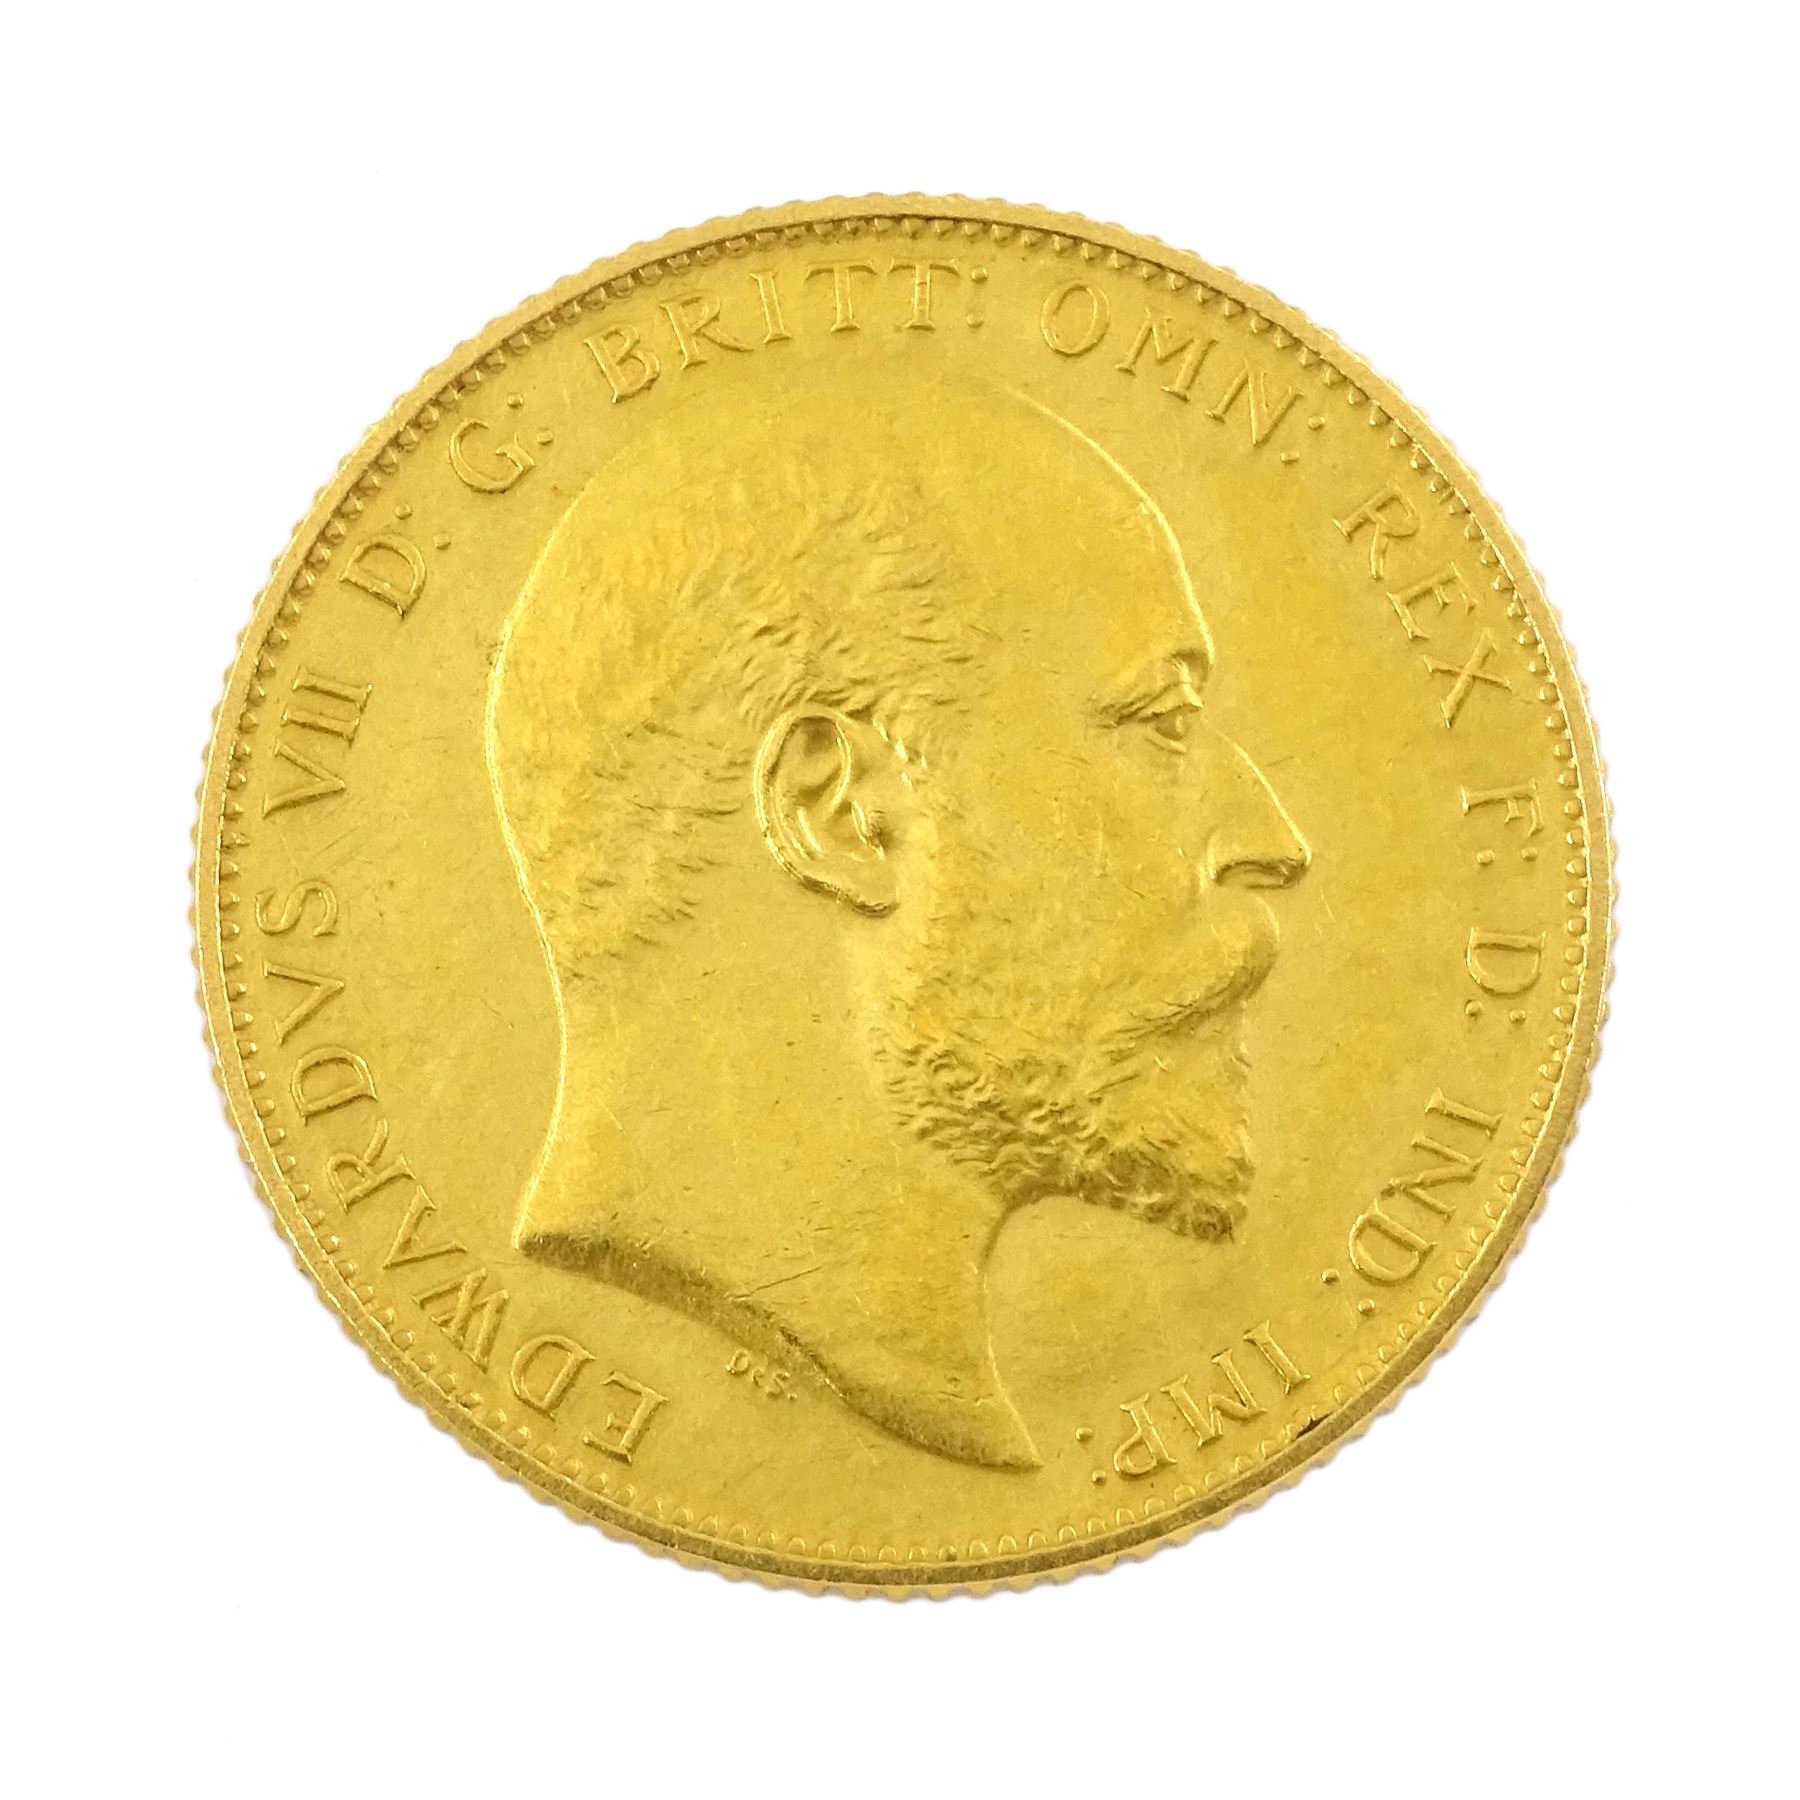 King Edward VII 1902 matt proof short coin set - Image 4 of 26